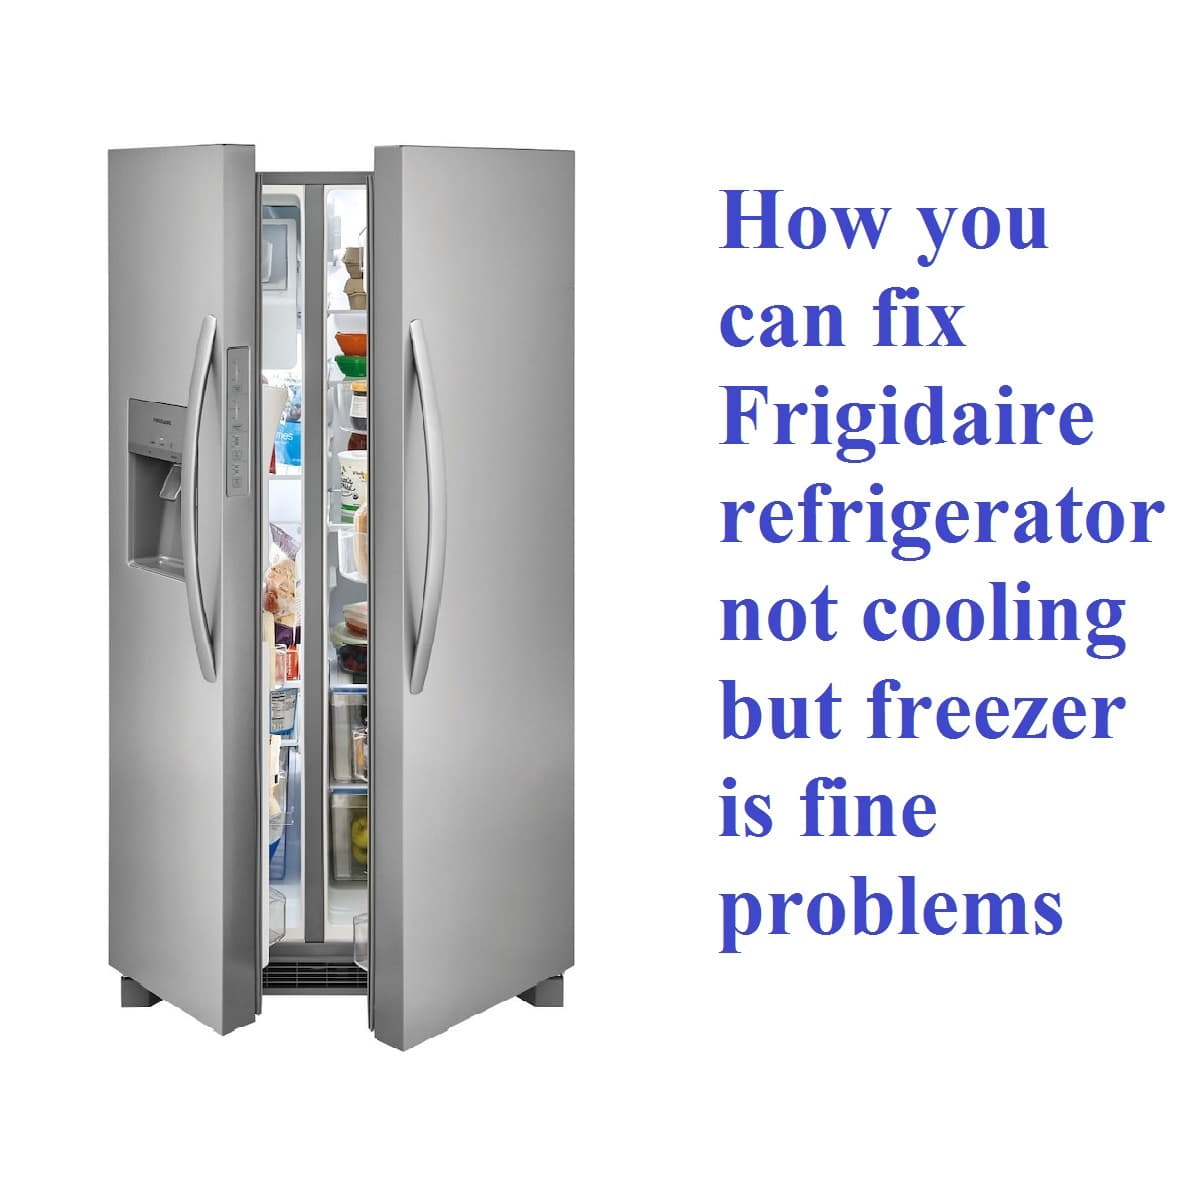 Frigidaire refrigerator not cooling but freezer fine